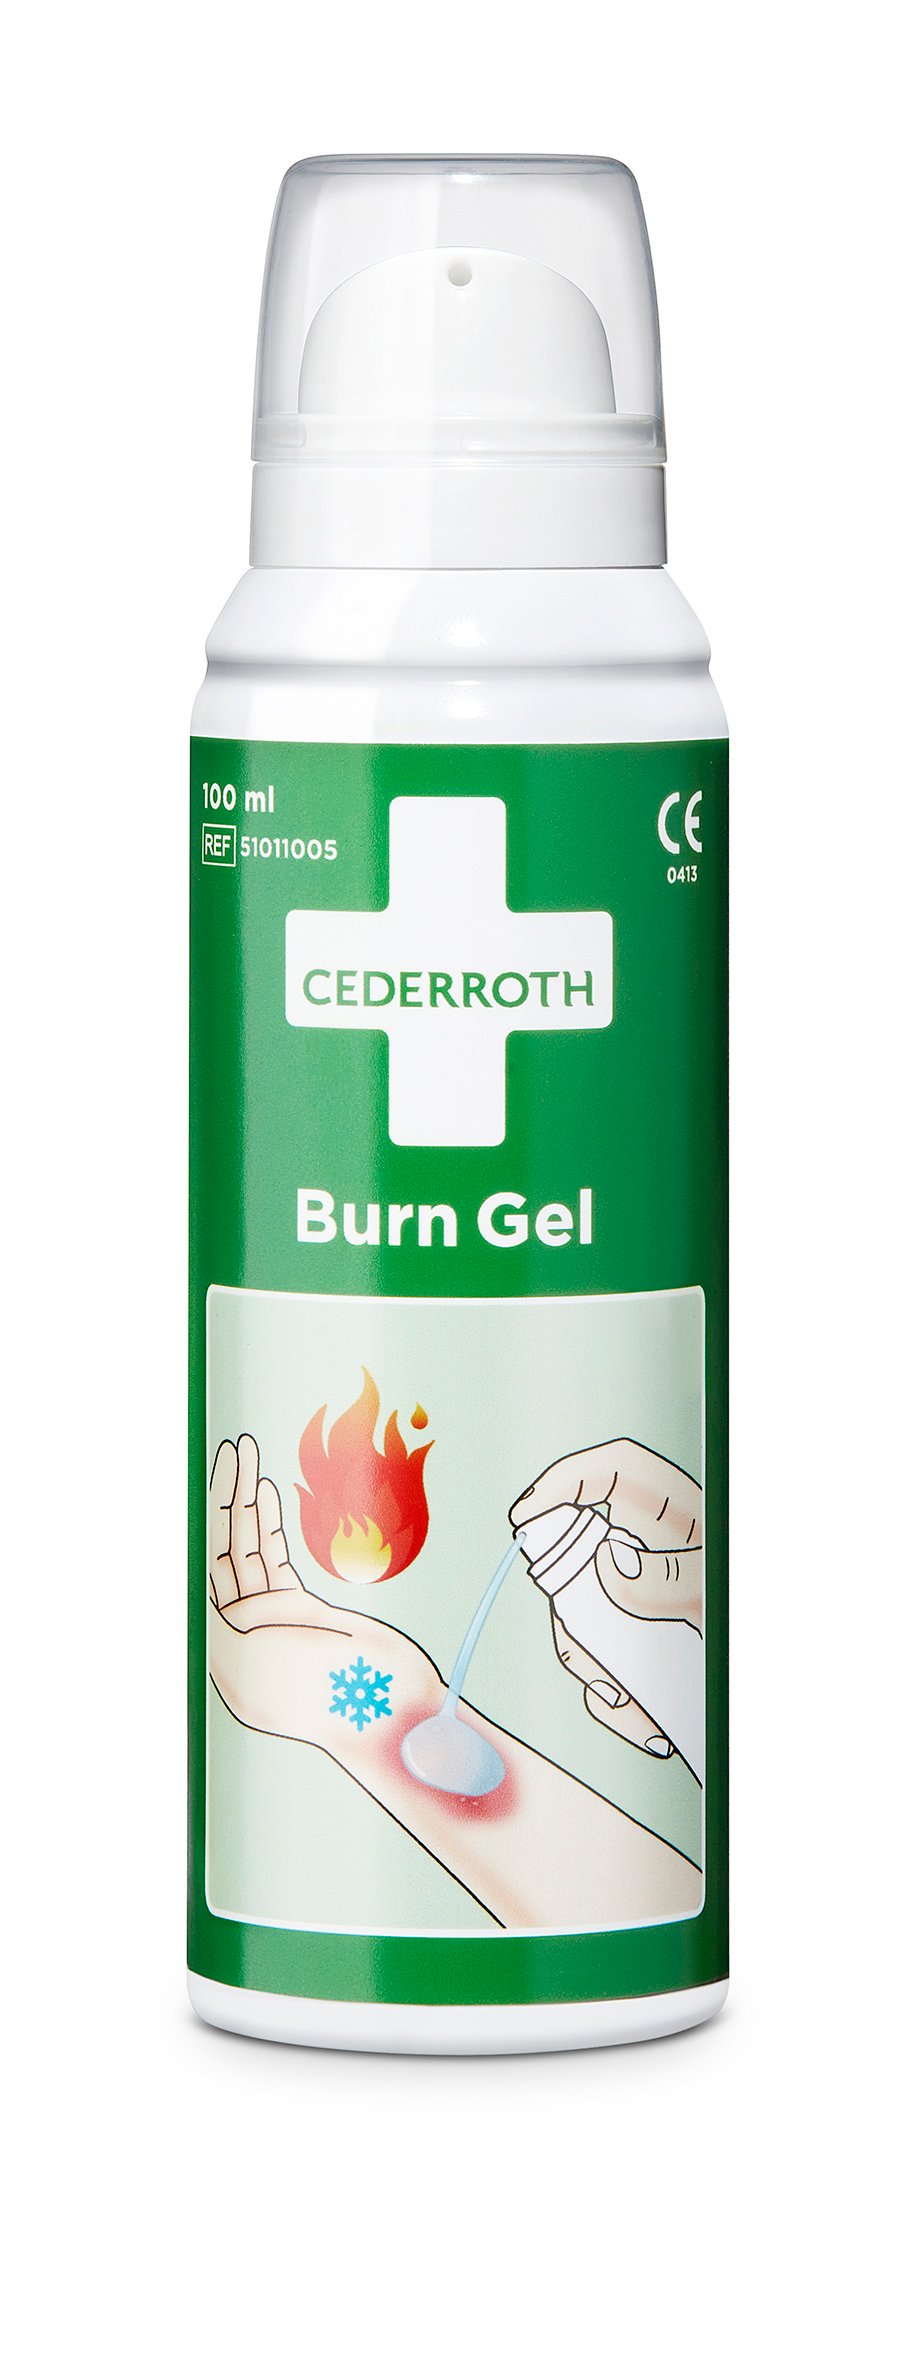 Brännskadegel Cederroth Burn Gel 100ml